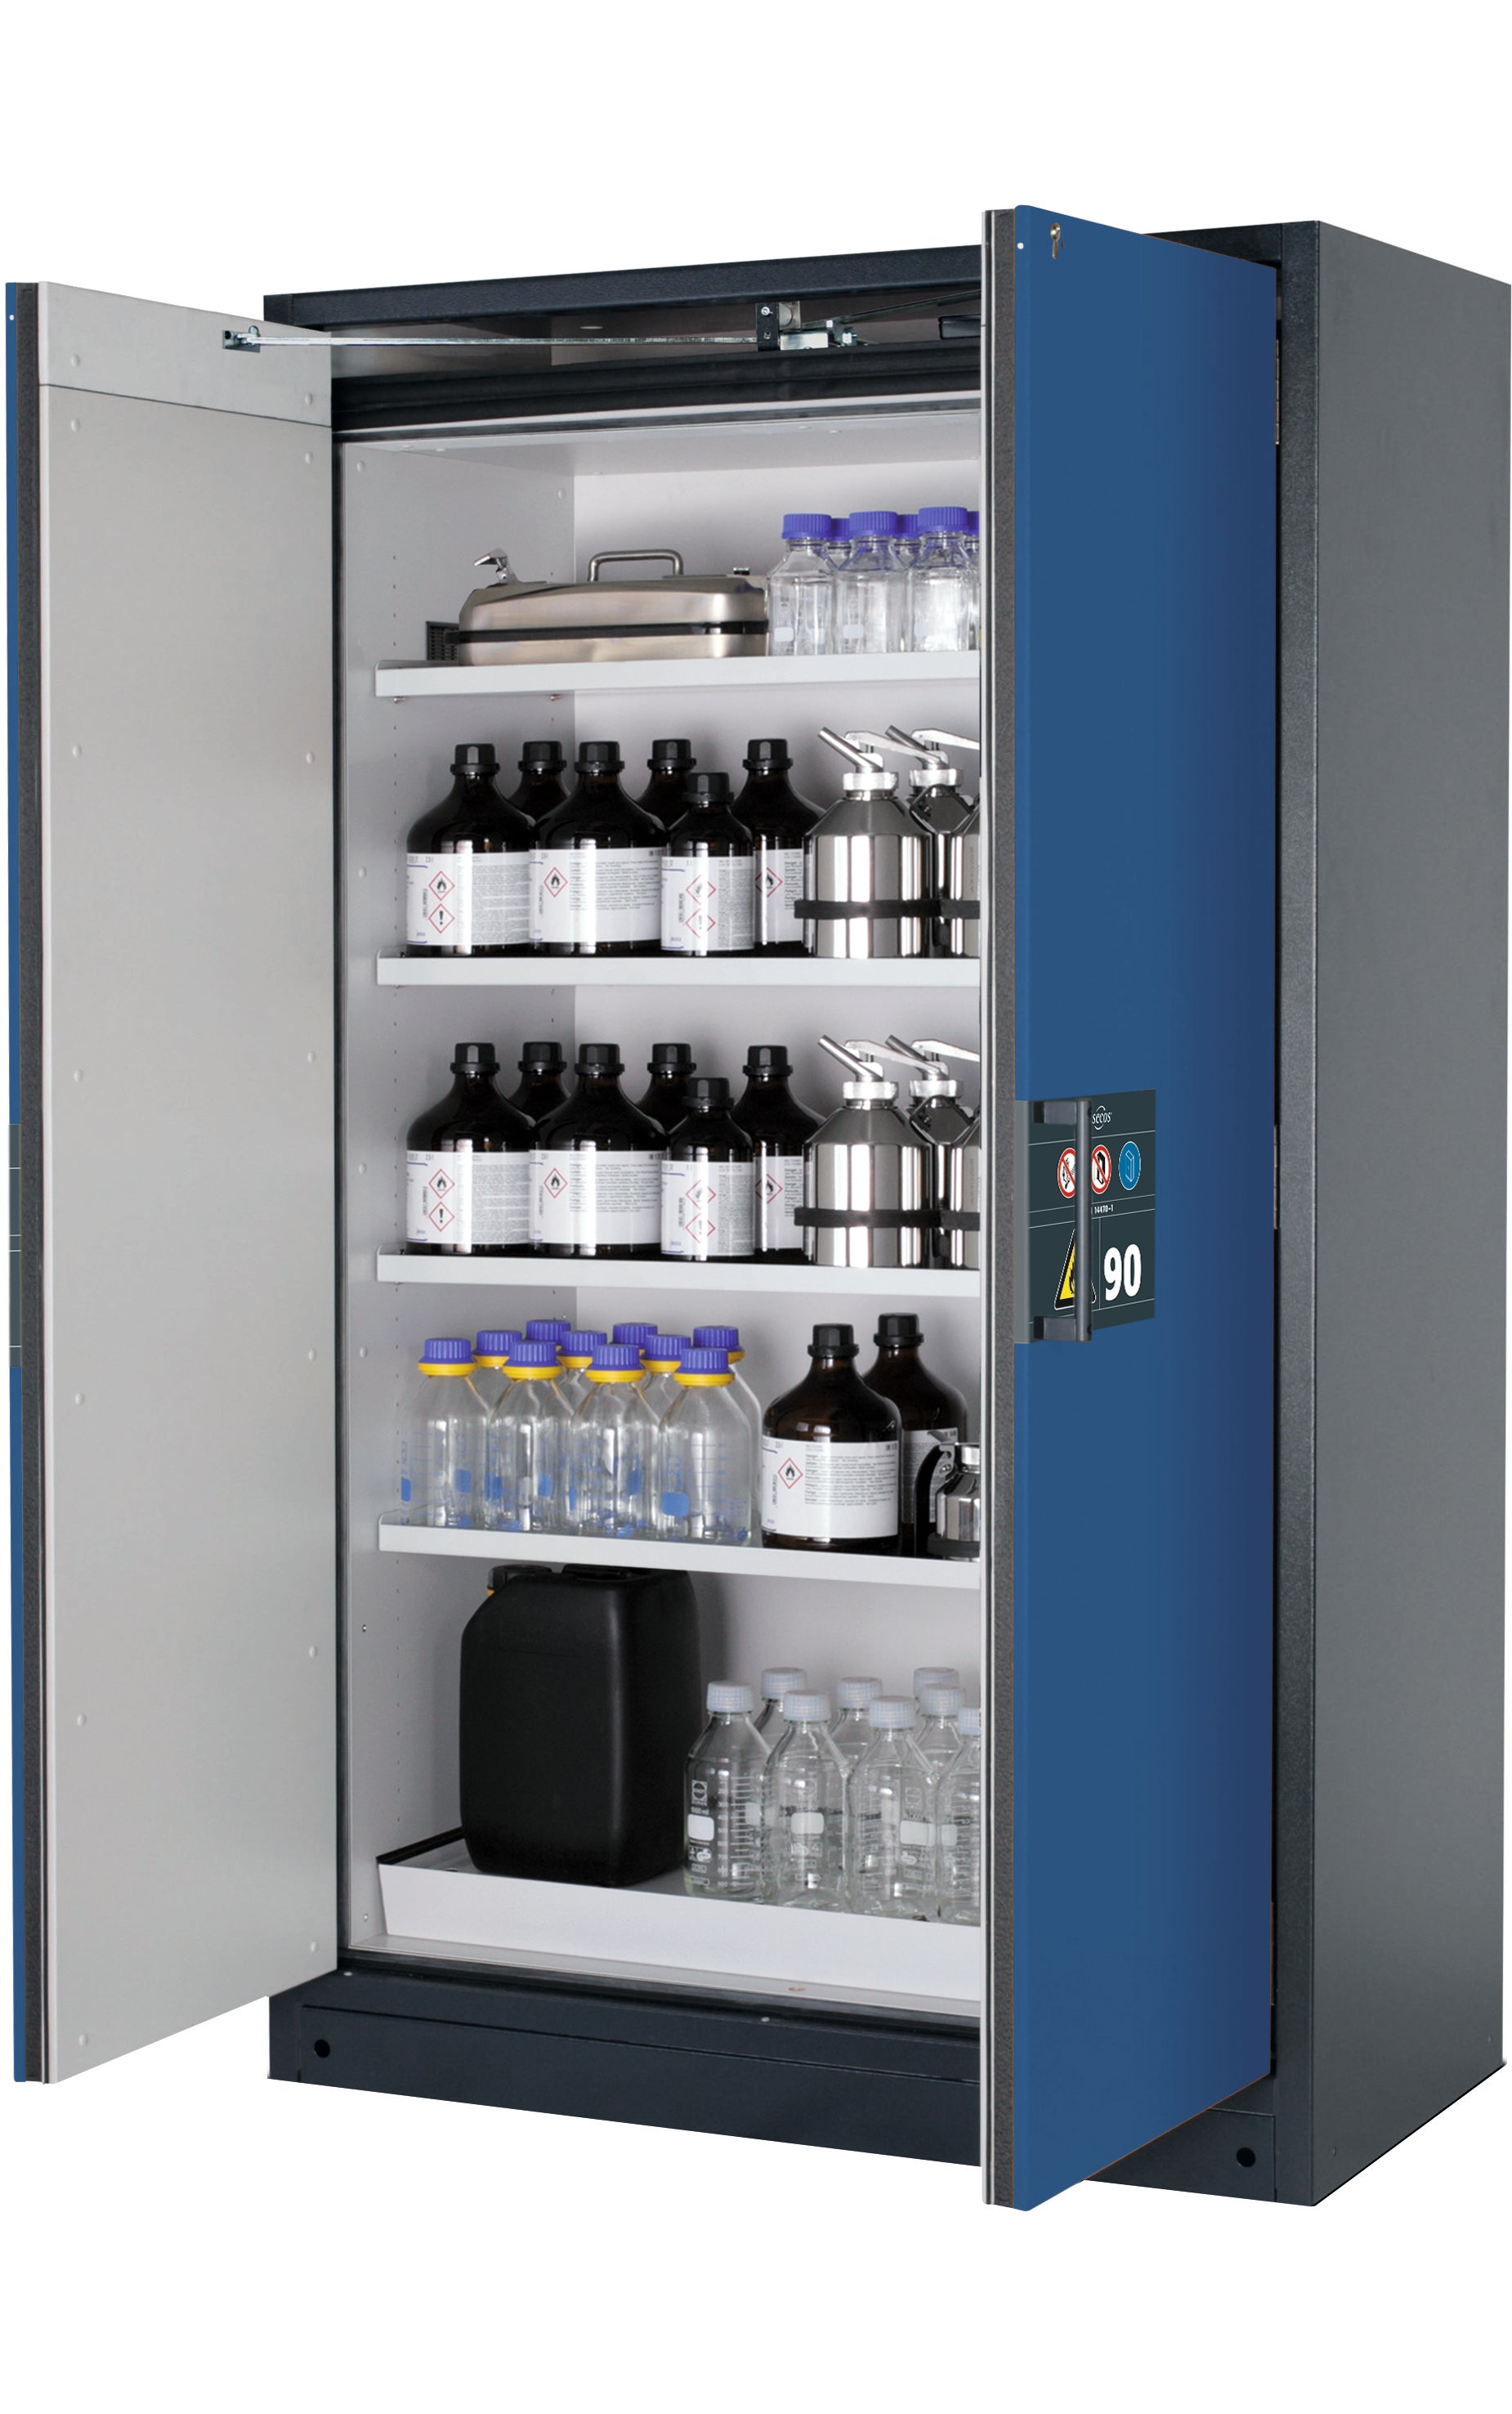 Type 90 safety storage cabinet Q-PEGASUS-90 model Q90.195.120.WDAC in gentian blue RAL 5010 with 4x shelf standard (sheet steel),